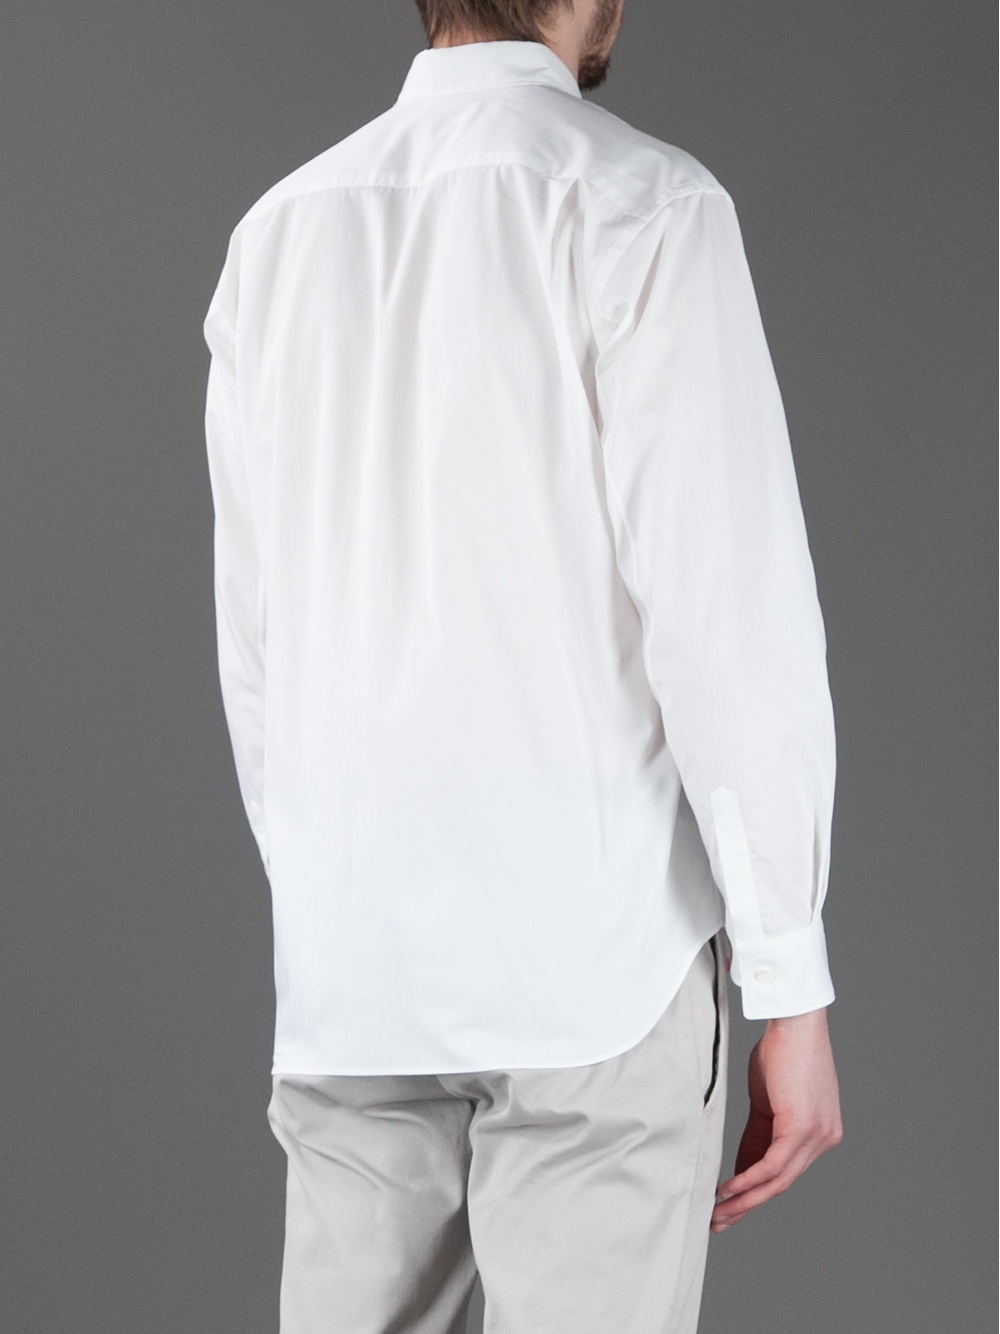 Comme des Garçons Contrast Circle Print Shirt in White for Men - Lyst